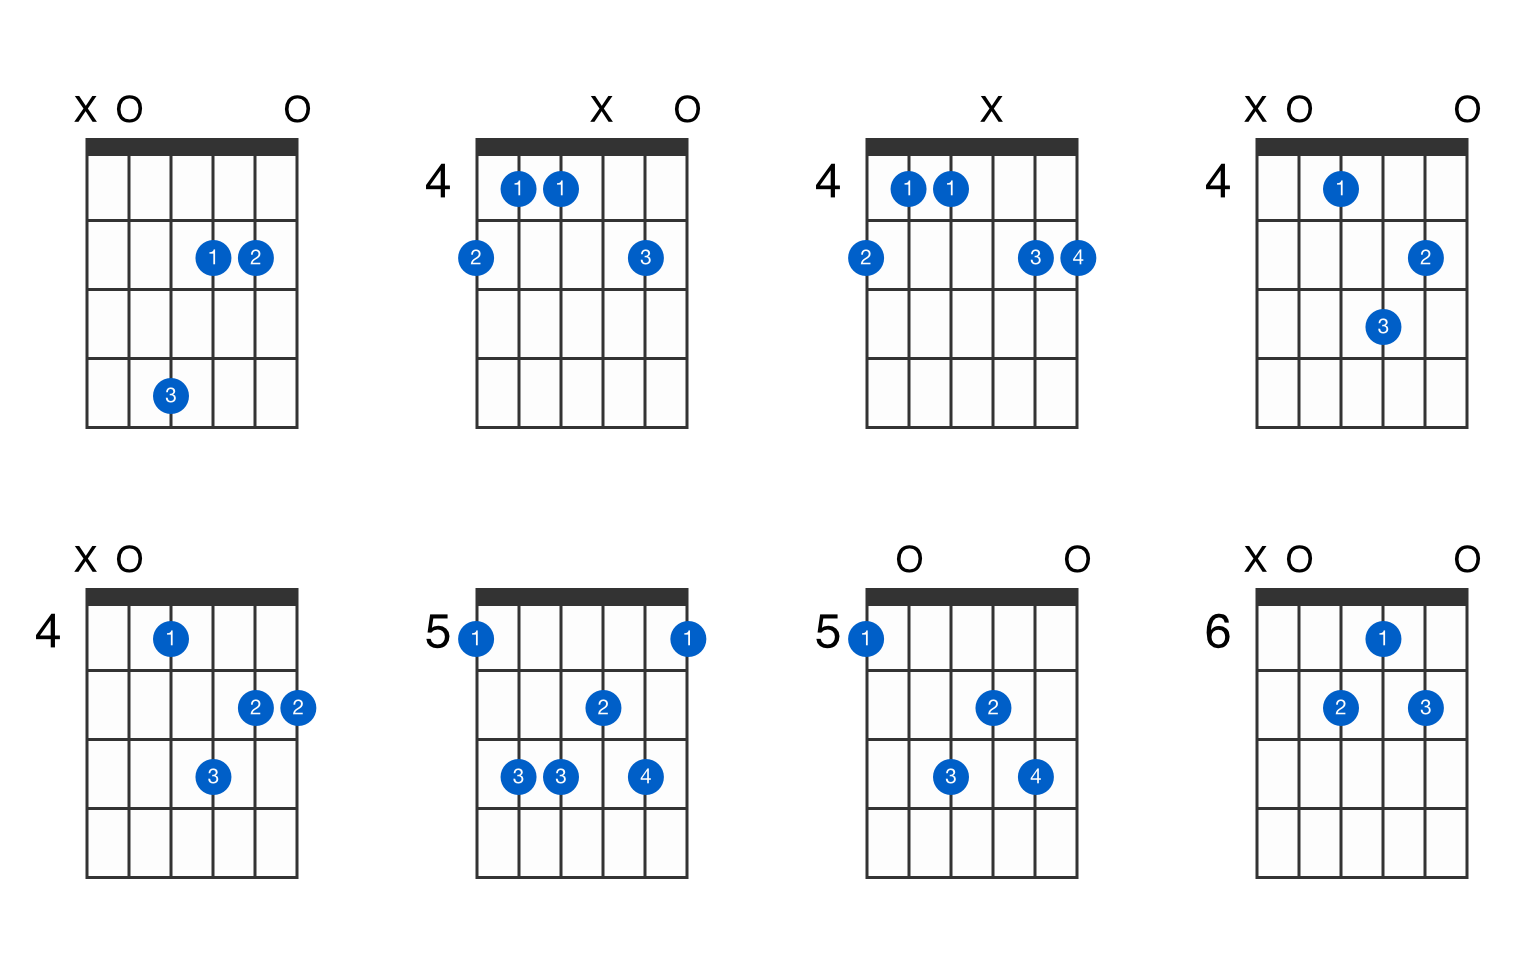 A6 guitar chord is also written as A6 or AM6. 